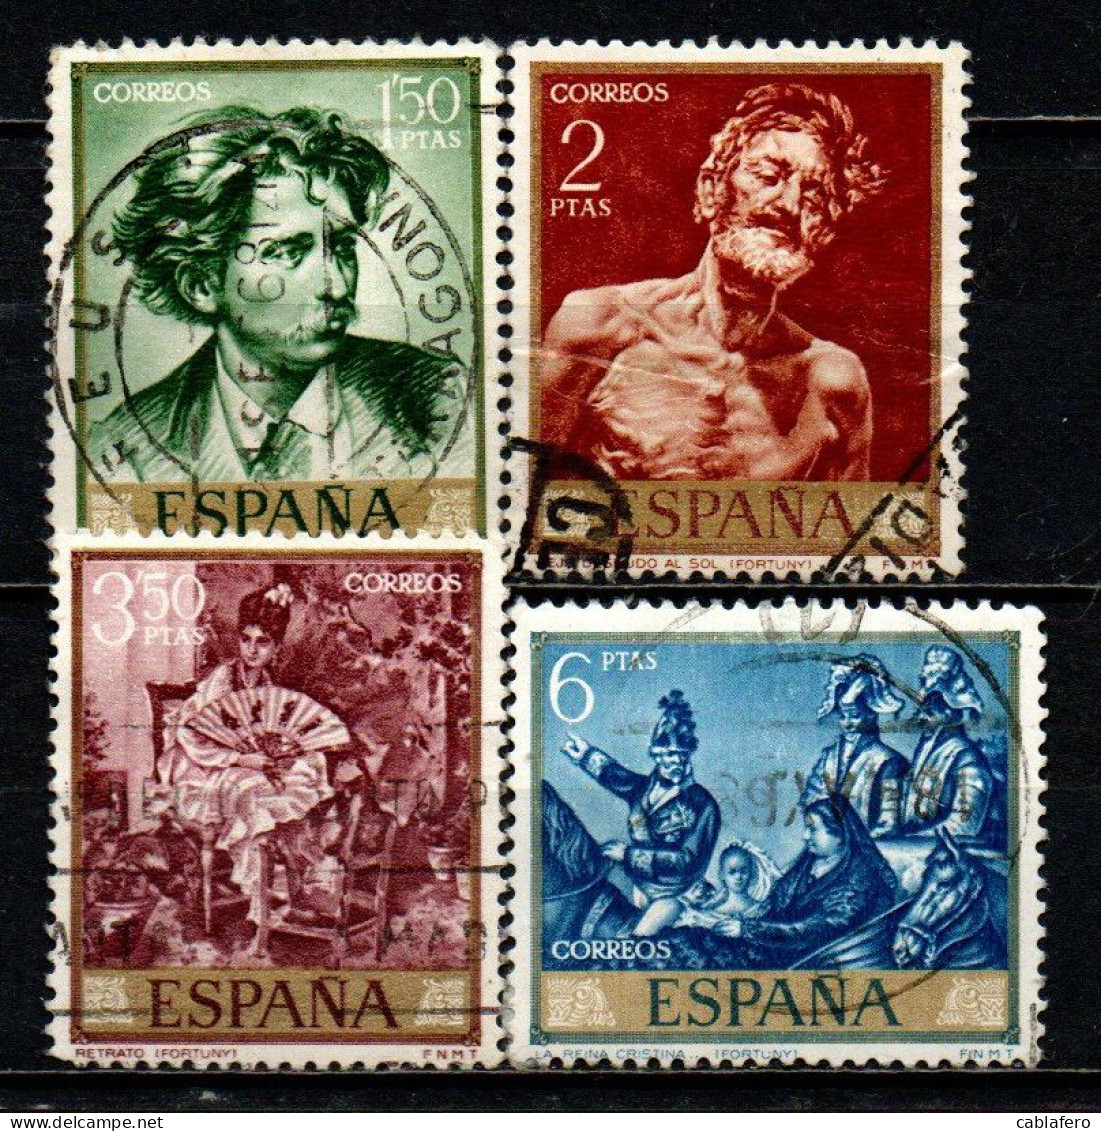 SPAGNA - 1968 - DIPINTI DI MARIANO FORTUNY MARSAL - USATI - Oblitérés